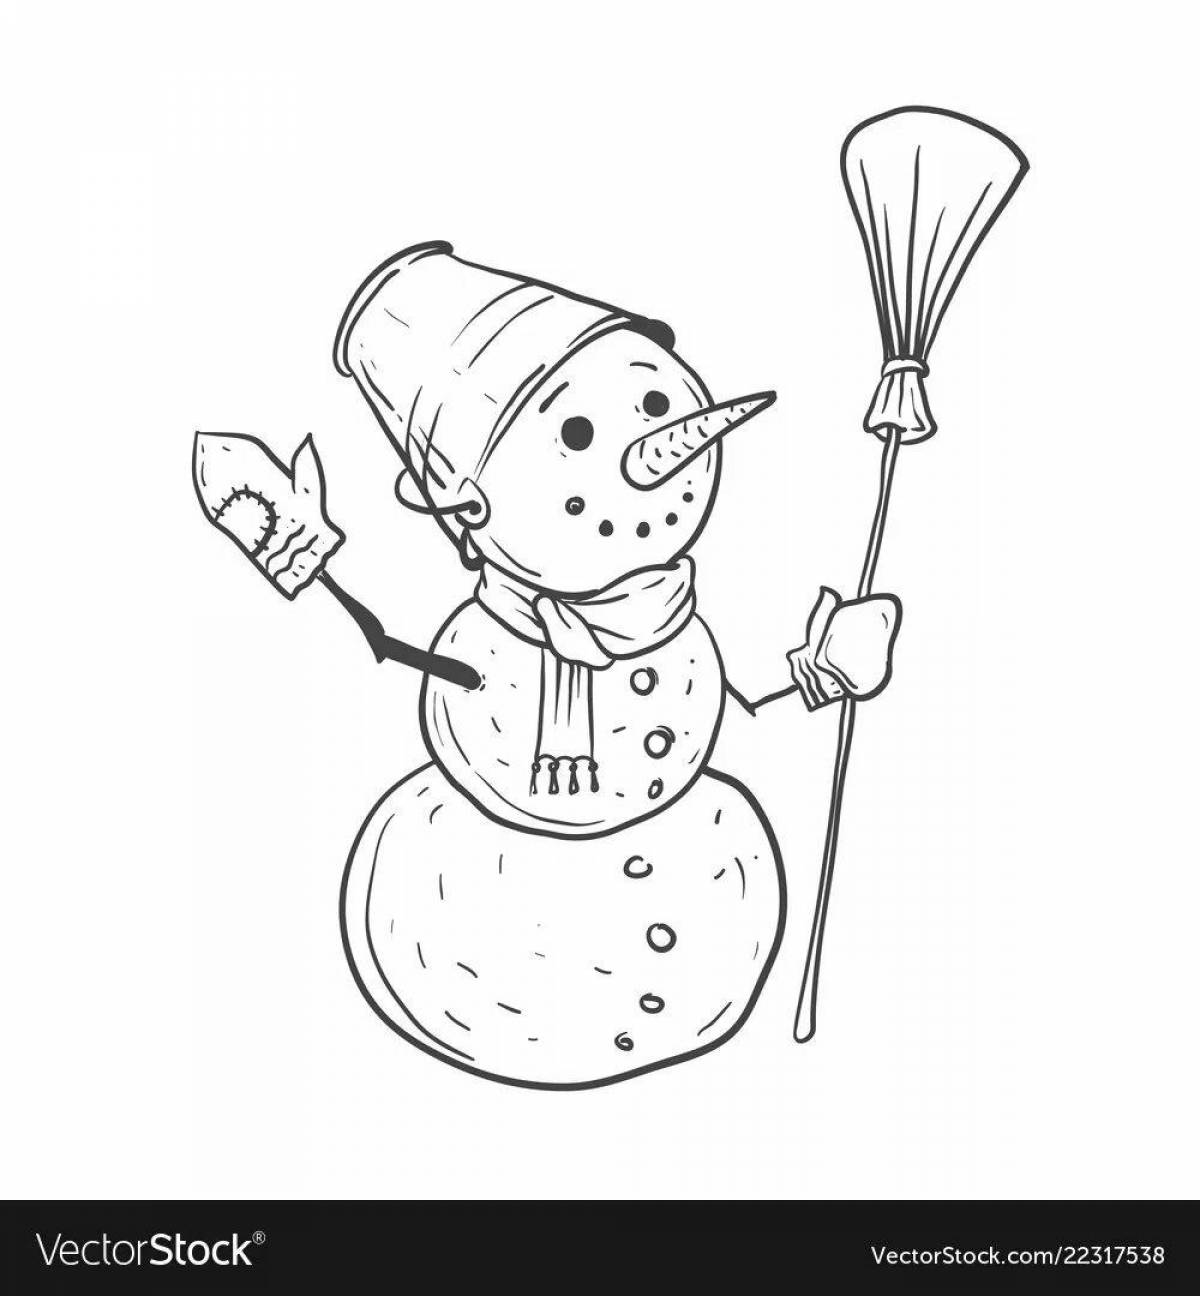 Unique snowman with broom coloring page